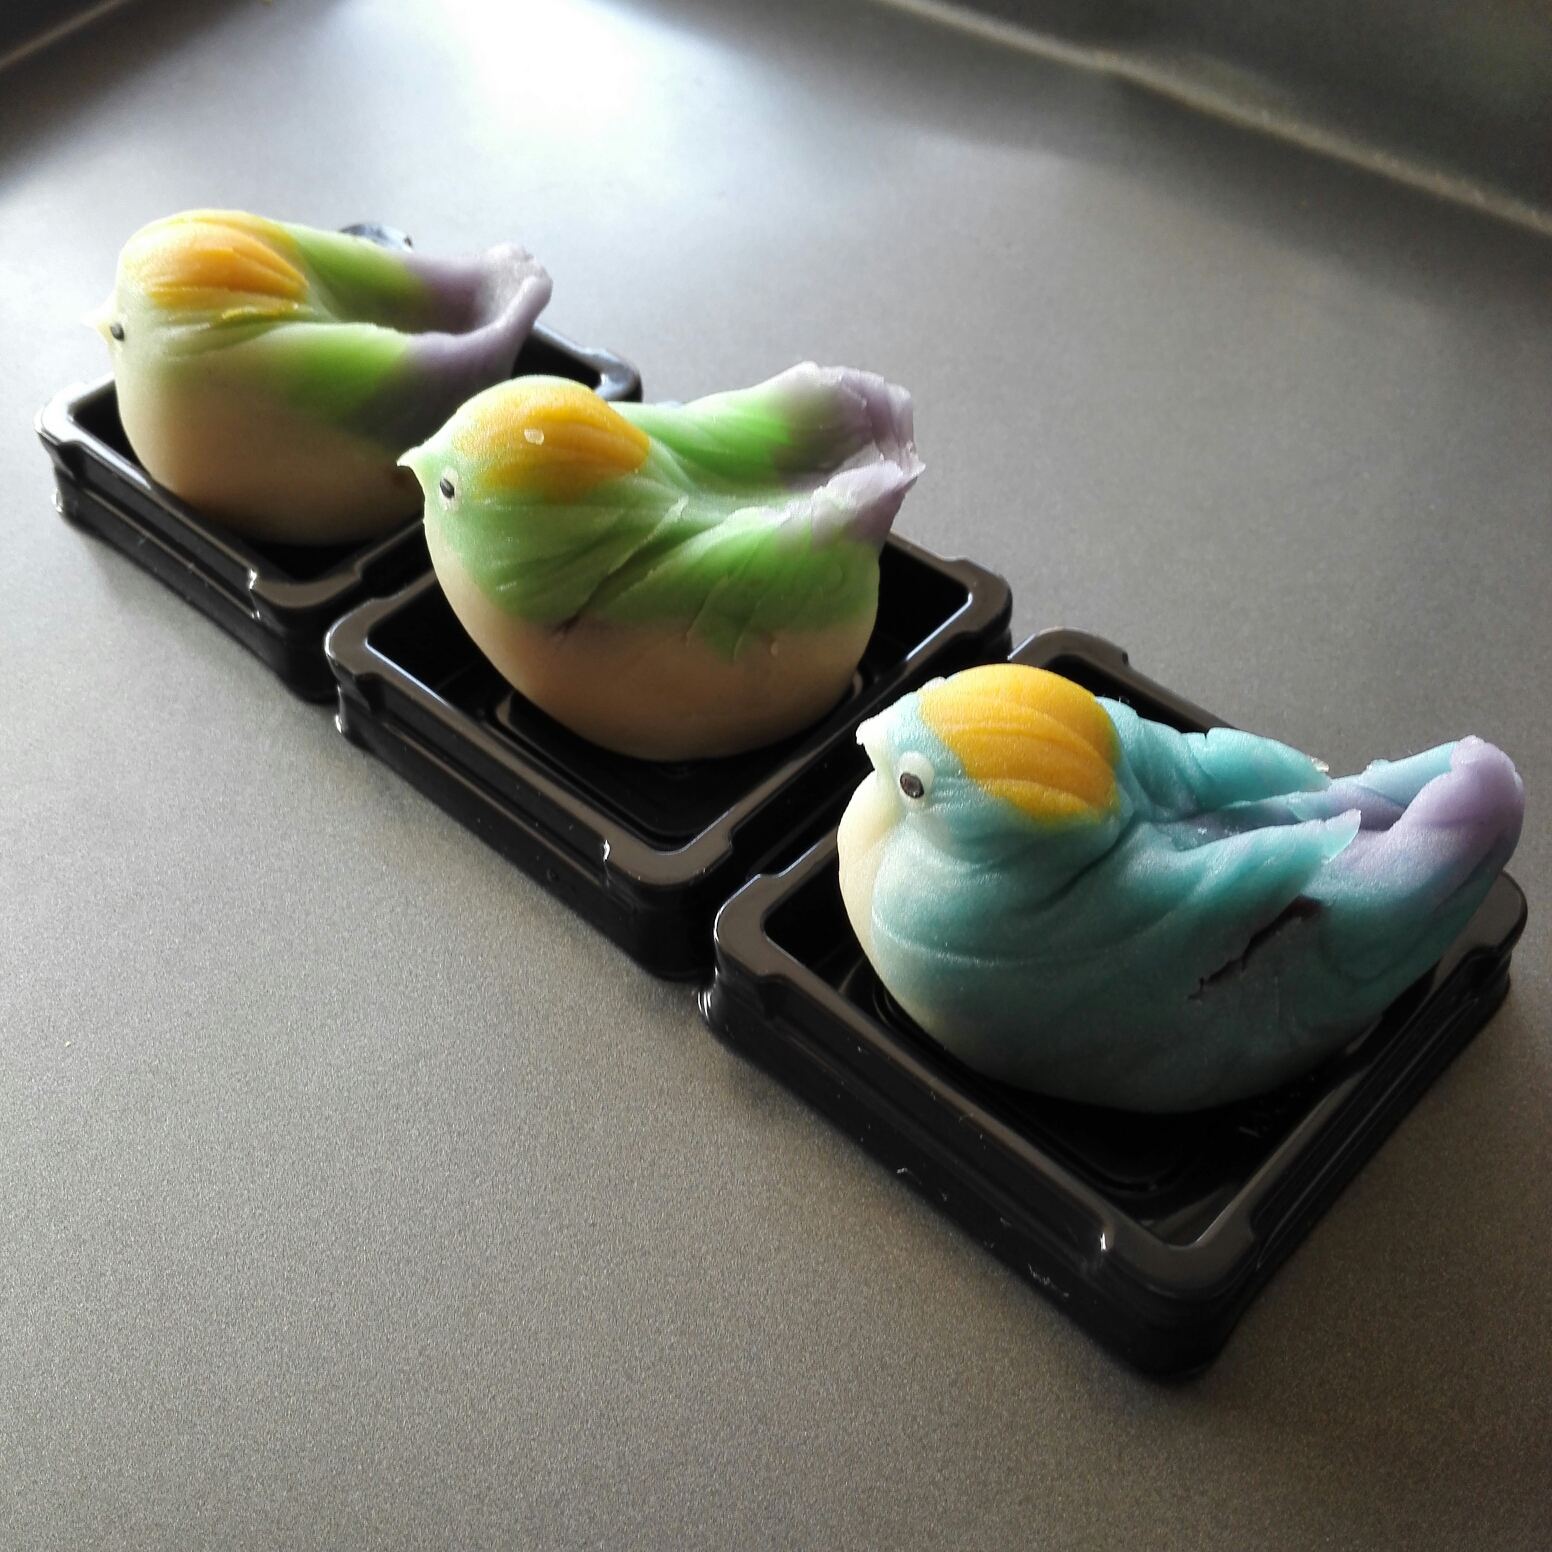 和菓子wagashi——山雀捏制技法参考